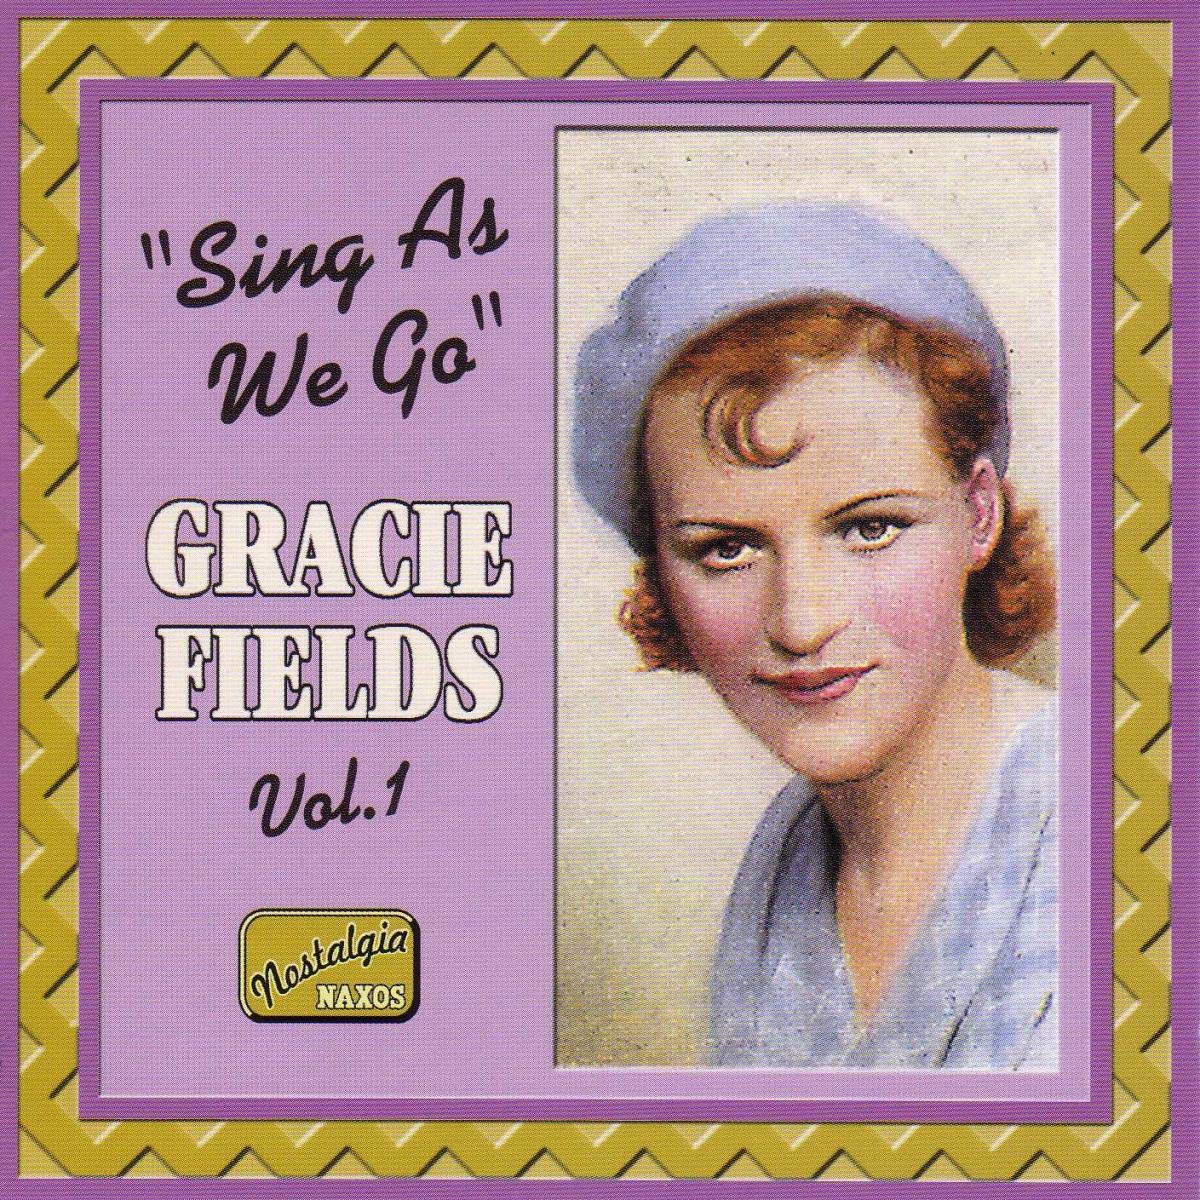 GRACIE FIELDS vol. 1 : Sing as We Go